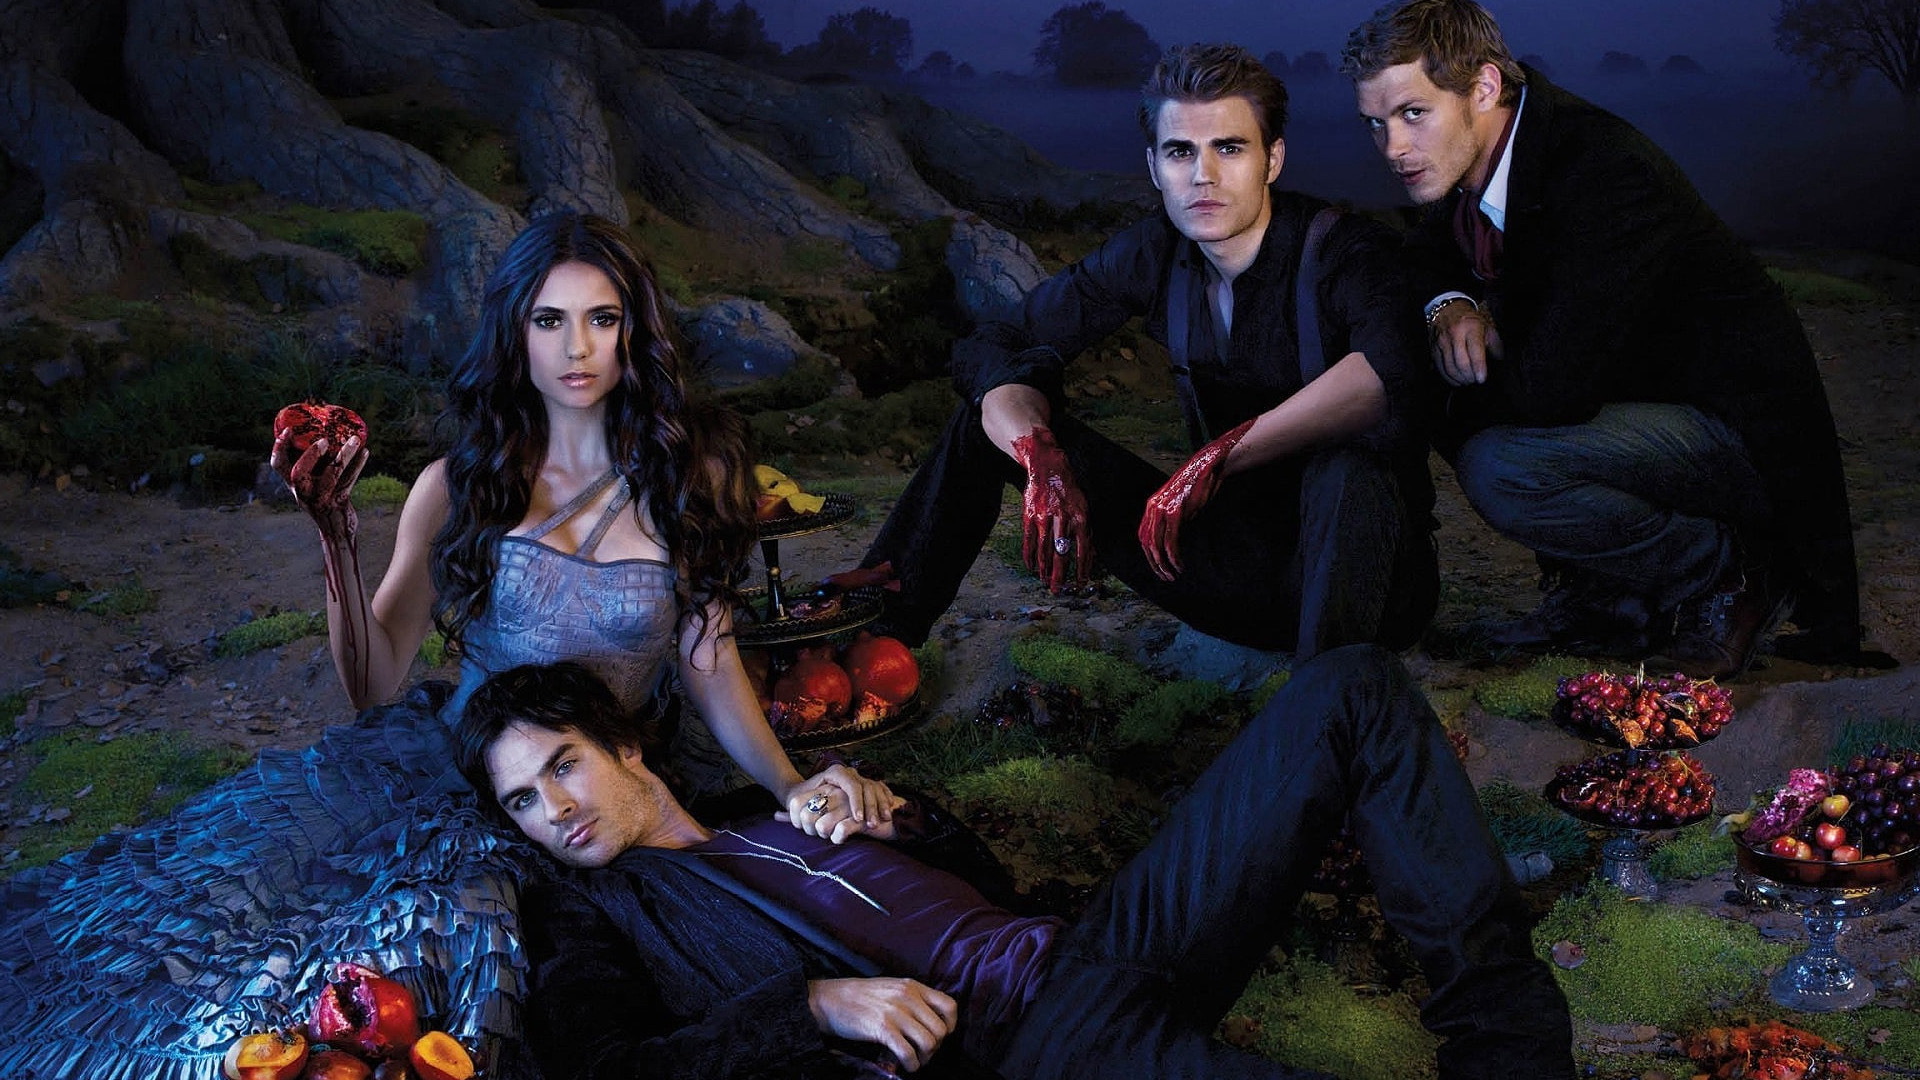 The Vampire Diaries (Season 3) / The Vampire Diaries (Season 3) (2011)